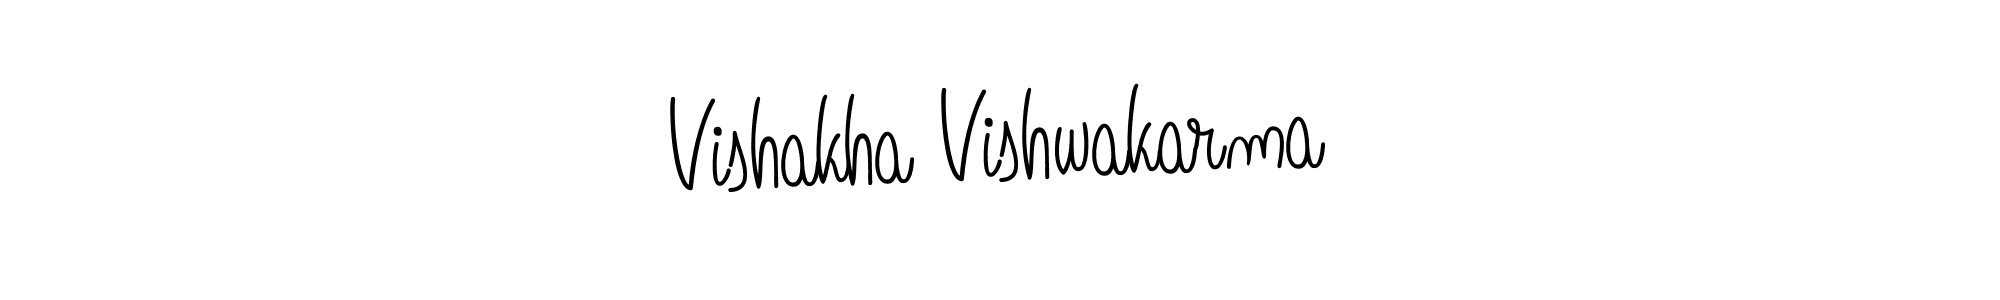 Make a beautiful signature design for name Vishakha Vishwakarma. Use this online signature maker to create a handwritten signature for free. Vishakha Vishwakarma signature style 5 images and pictures png